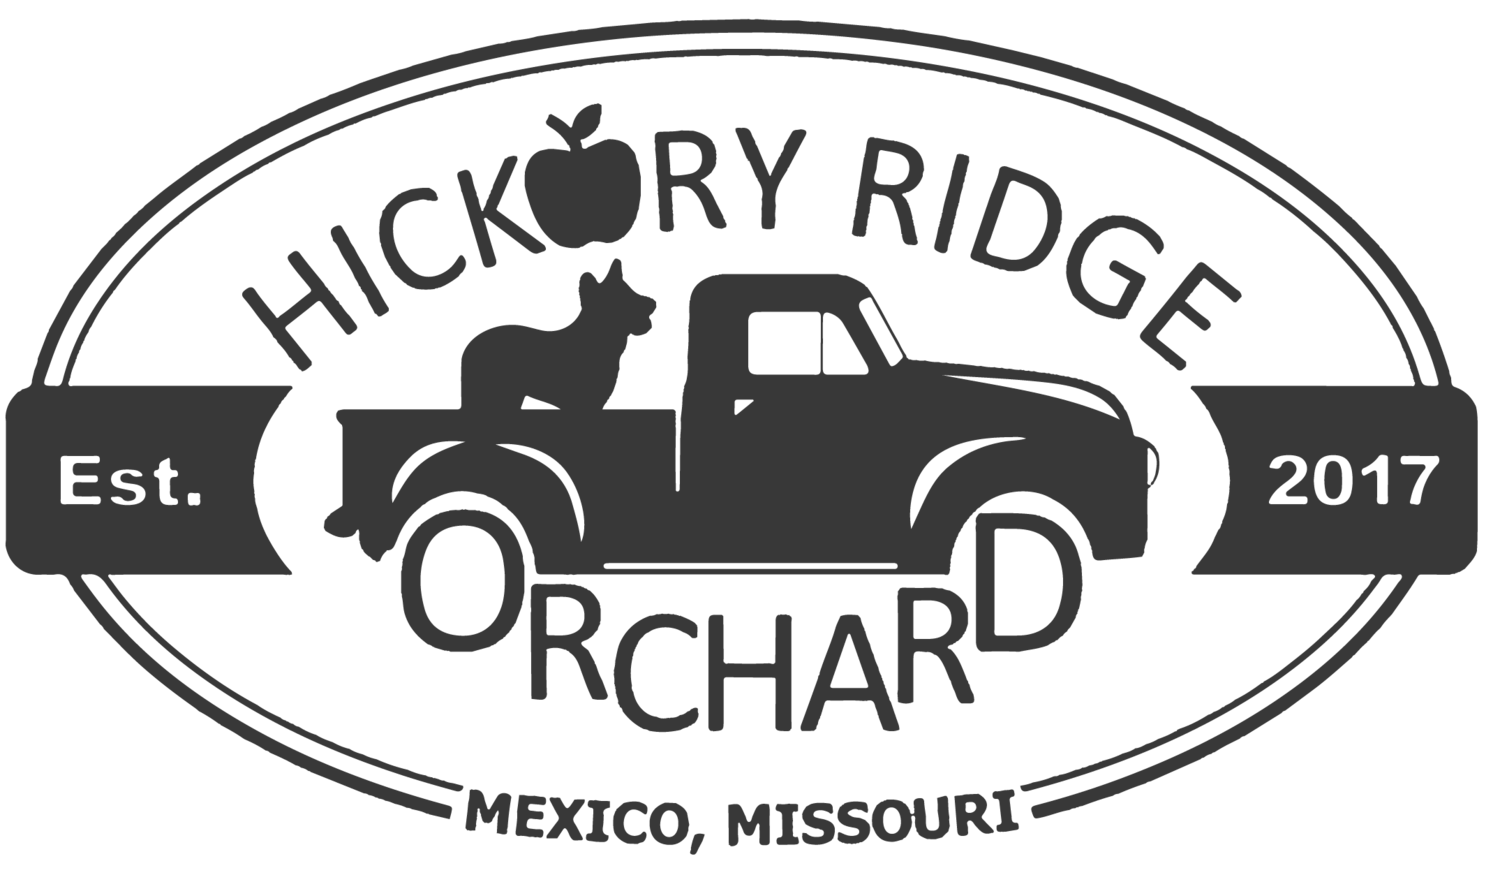 Hickory Ridge Orchard